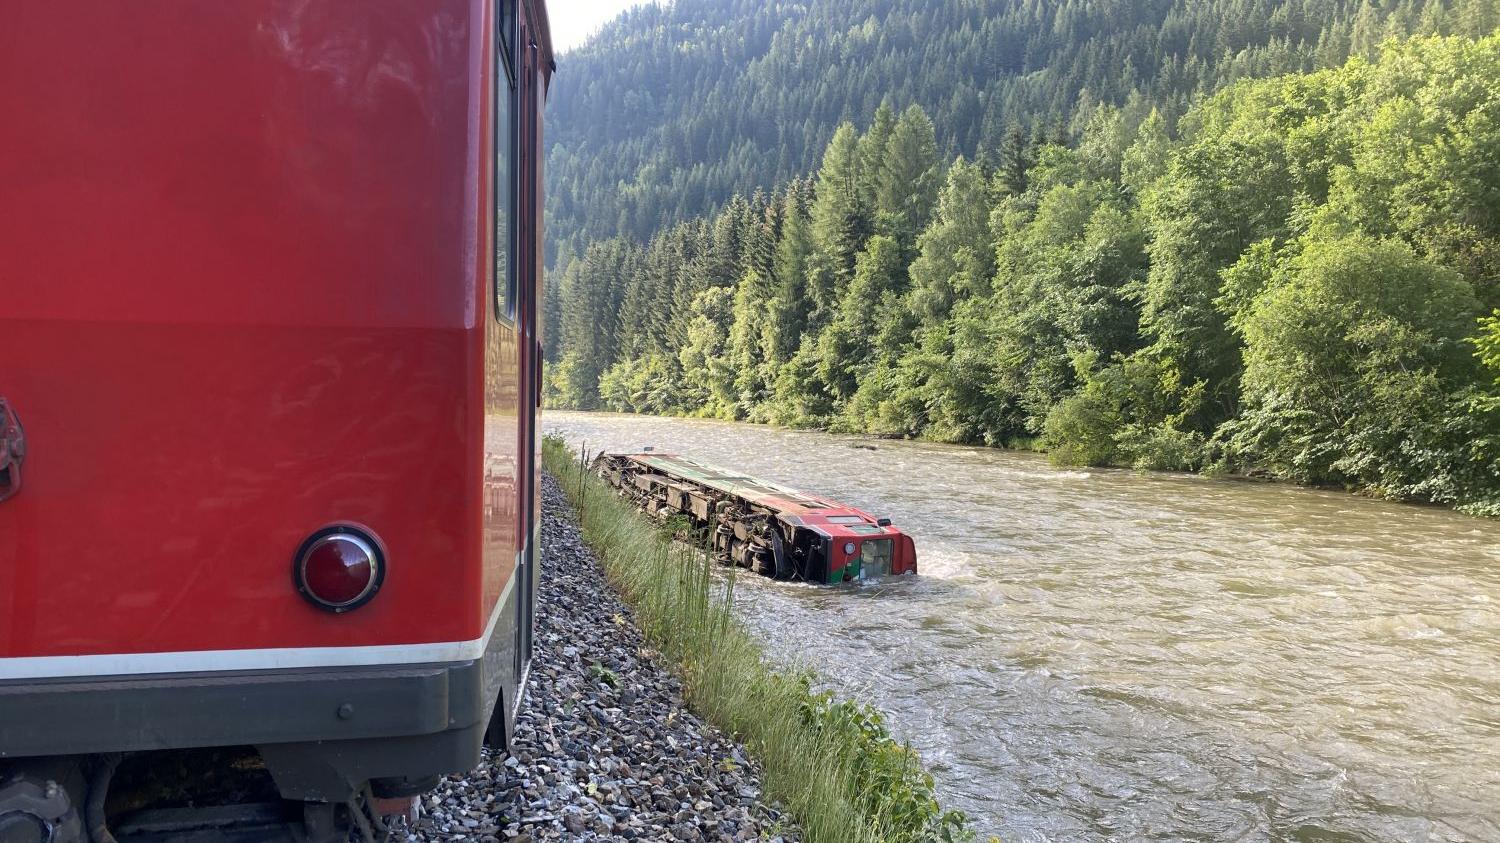 A train full of children fell into a river in Austria